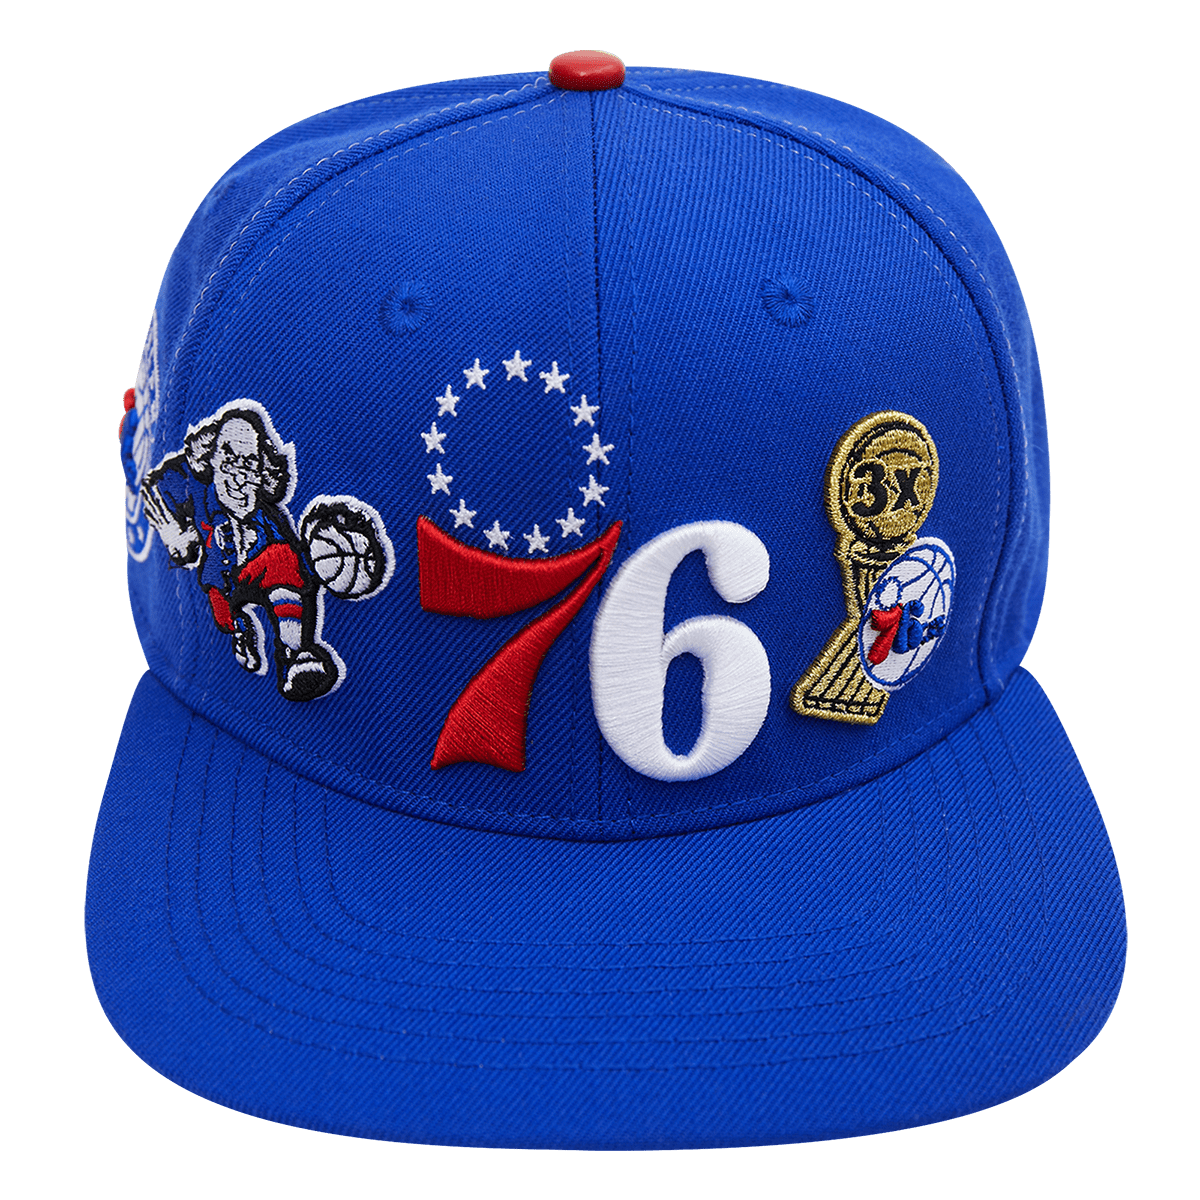 Philadelphia 76ers All-Star Game Jerseys, 76ers All-Star Hats